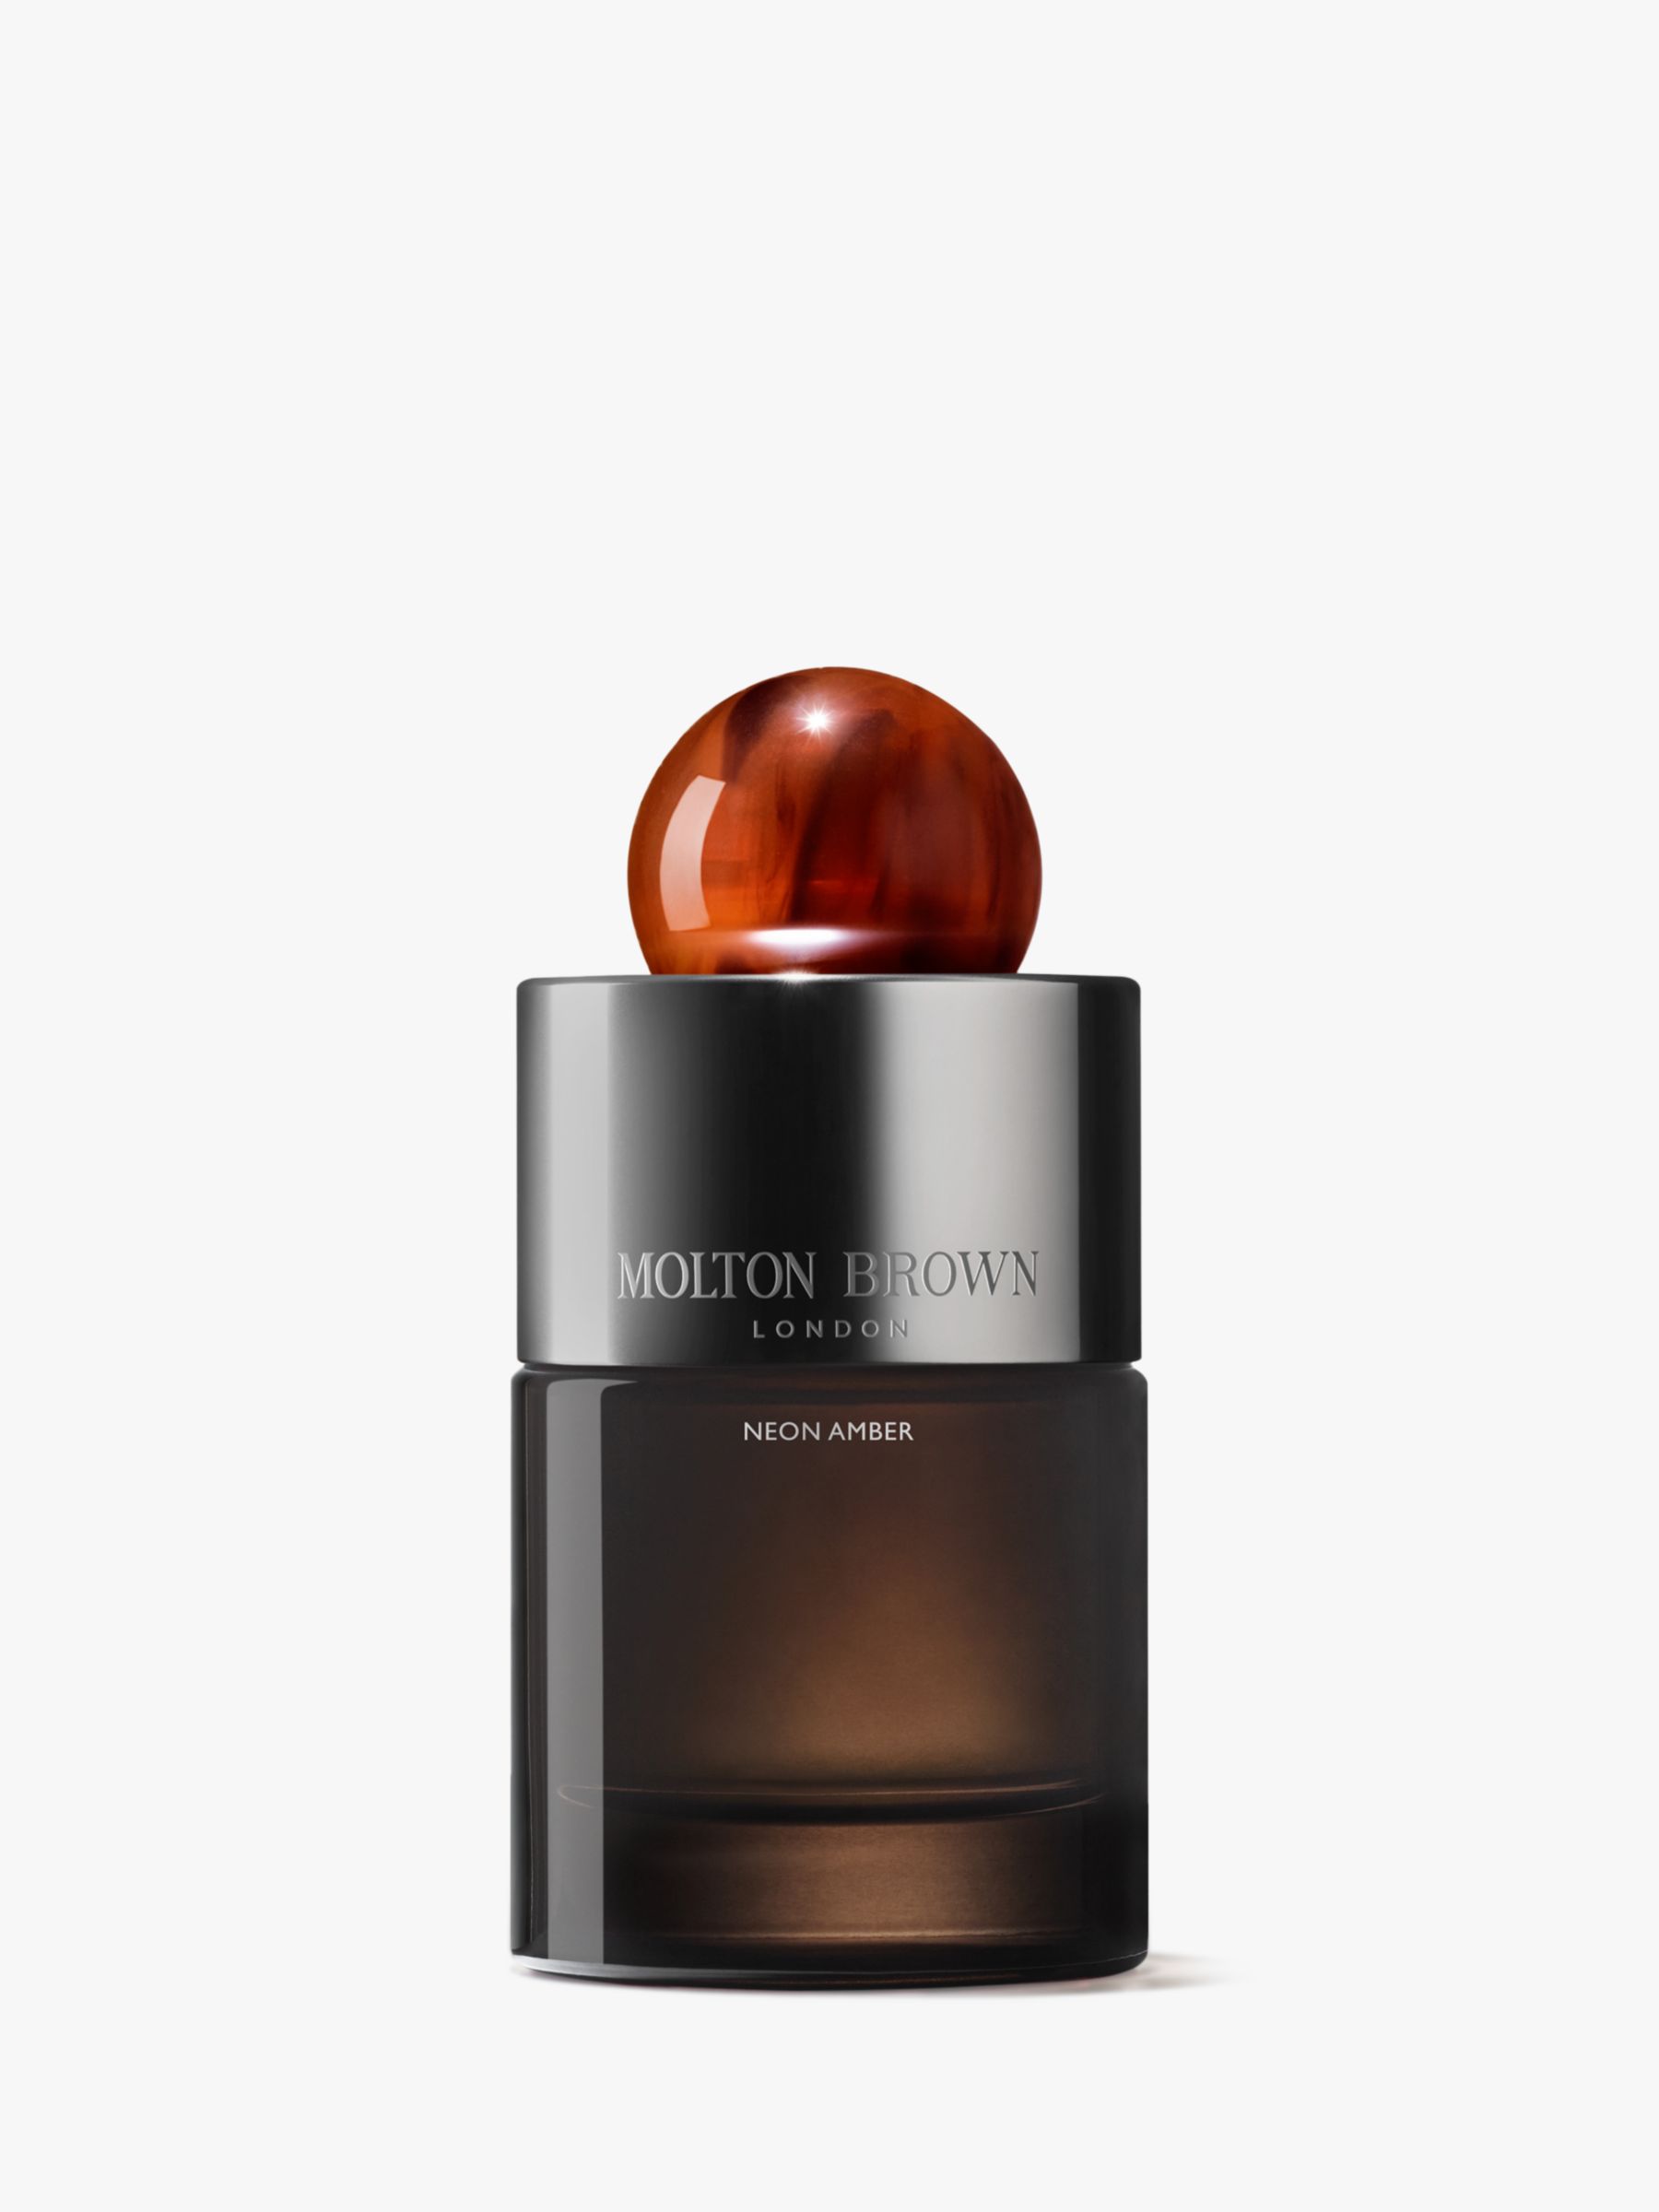 Molton Brown Neon Amber Eau De Parfum, 100ml